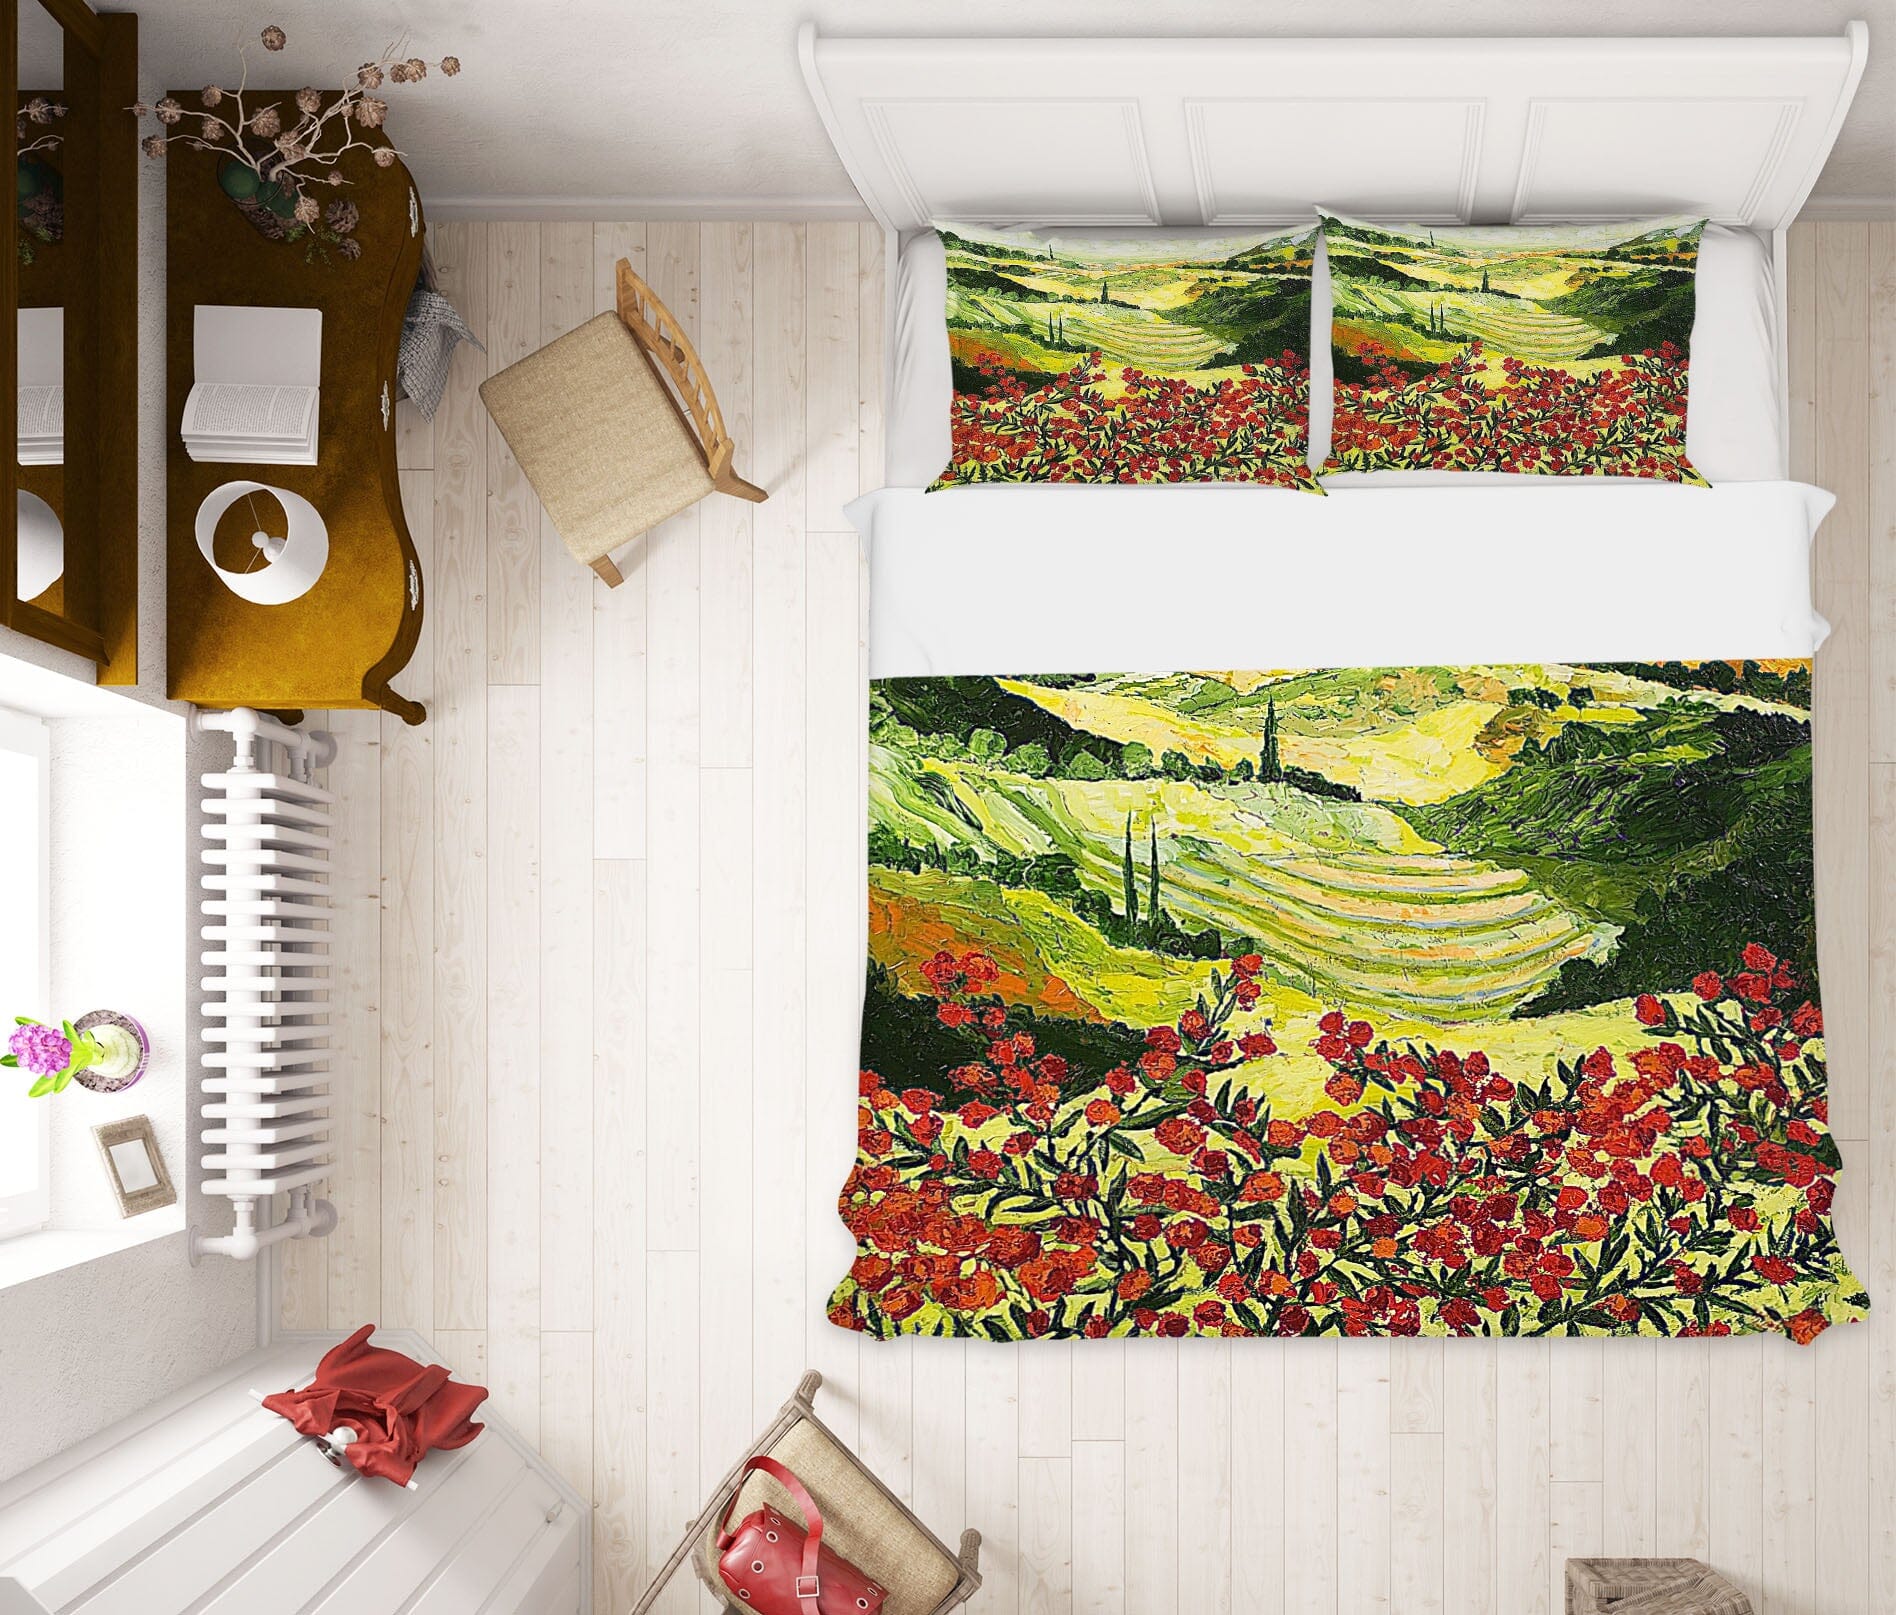 3D Sea Of Flowers 2120 Allan P. Friedlander Bedding Bed Pillowcases Quilt Quiet Covers AJ Creativity Home 